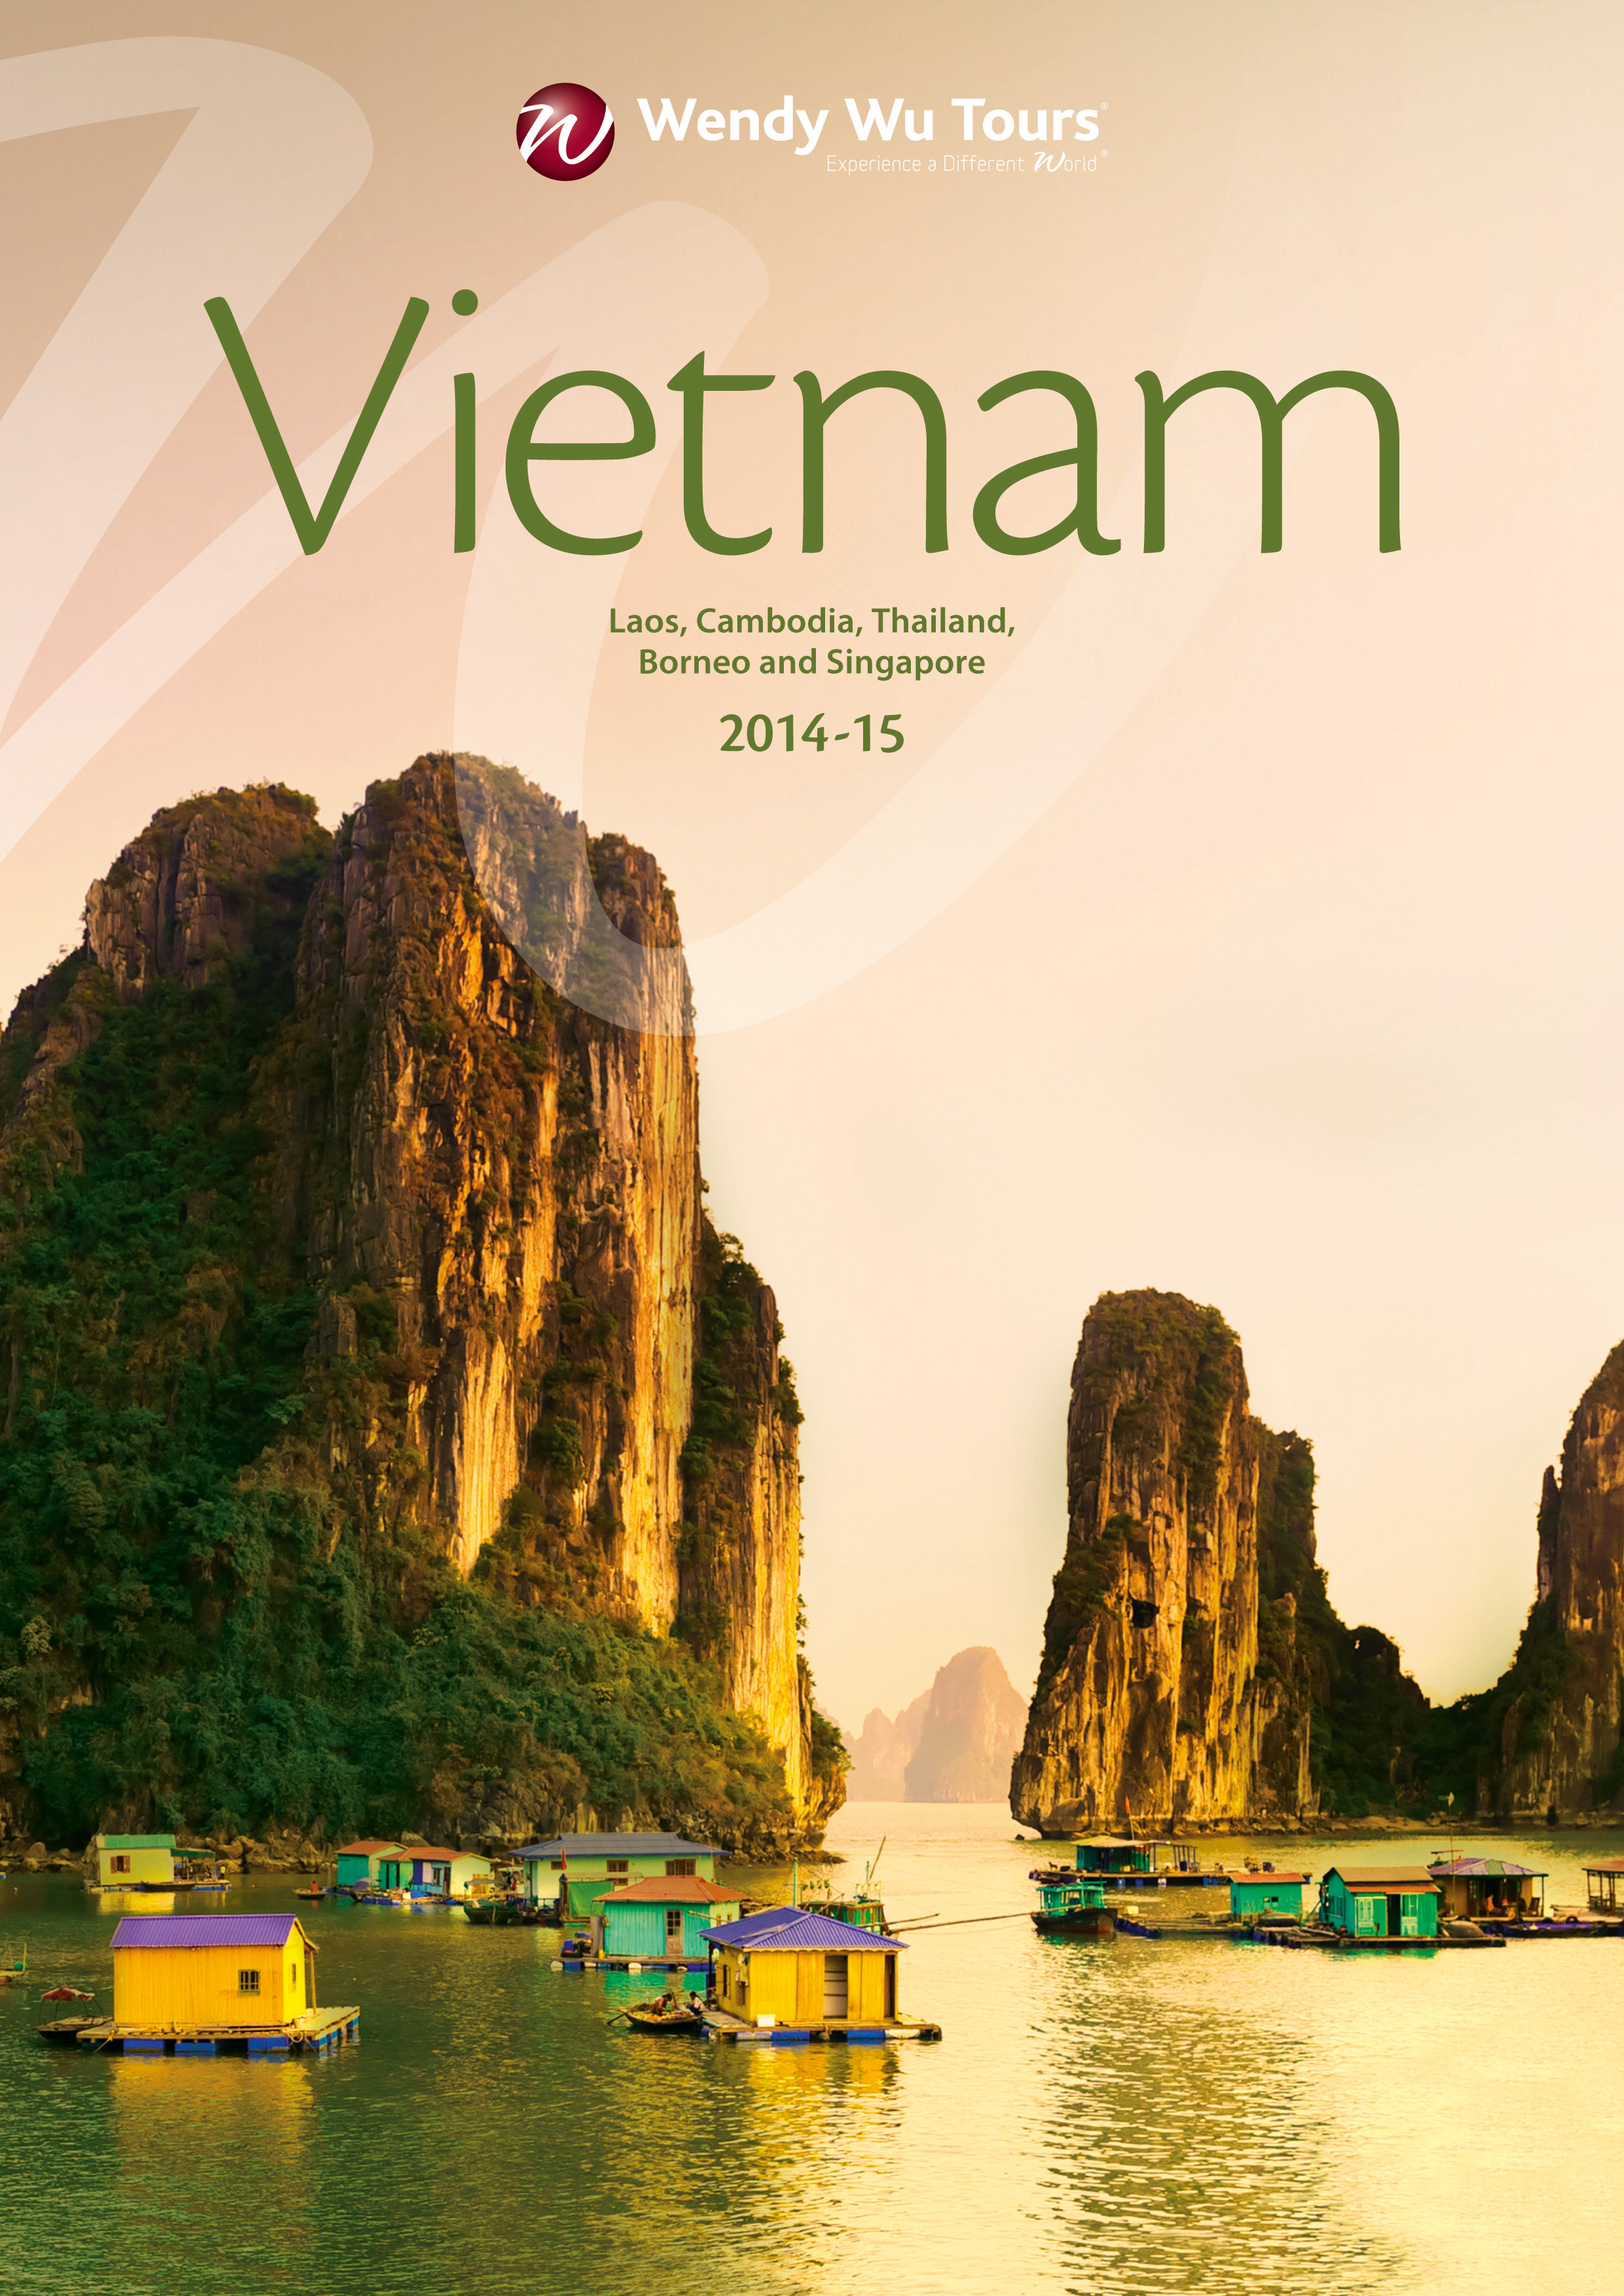 Travel Daily | Wendy Wu Tours 2014/15 Vietnam brochure